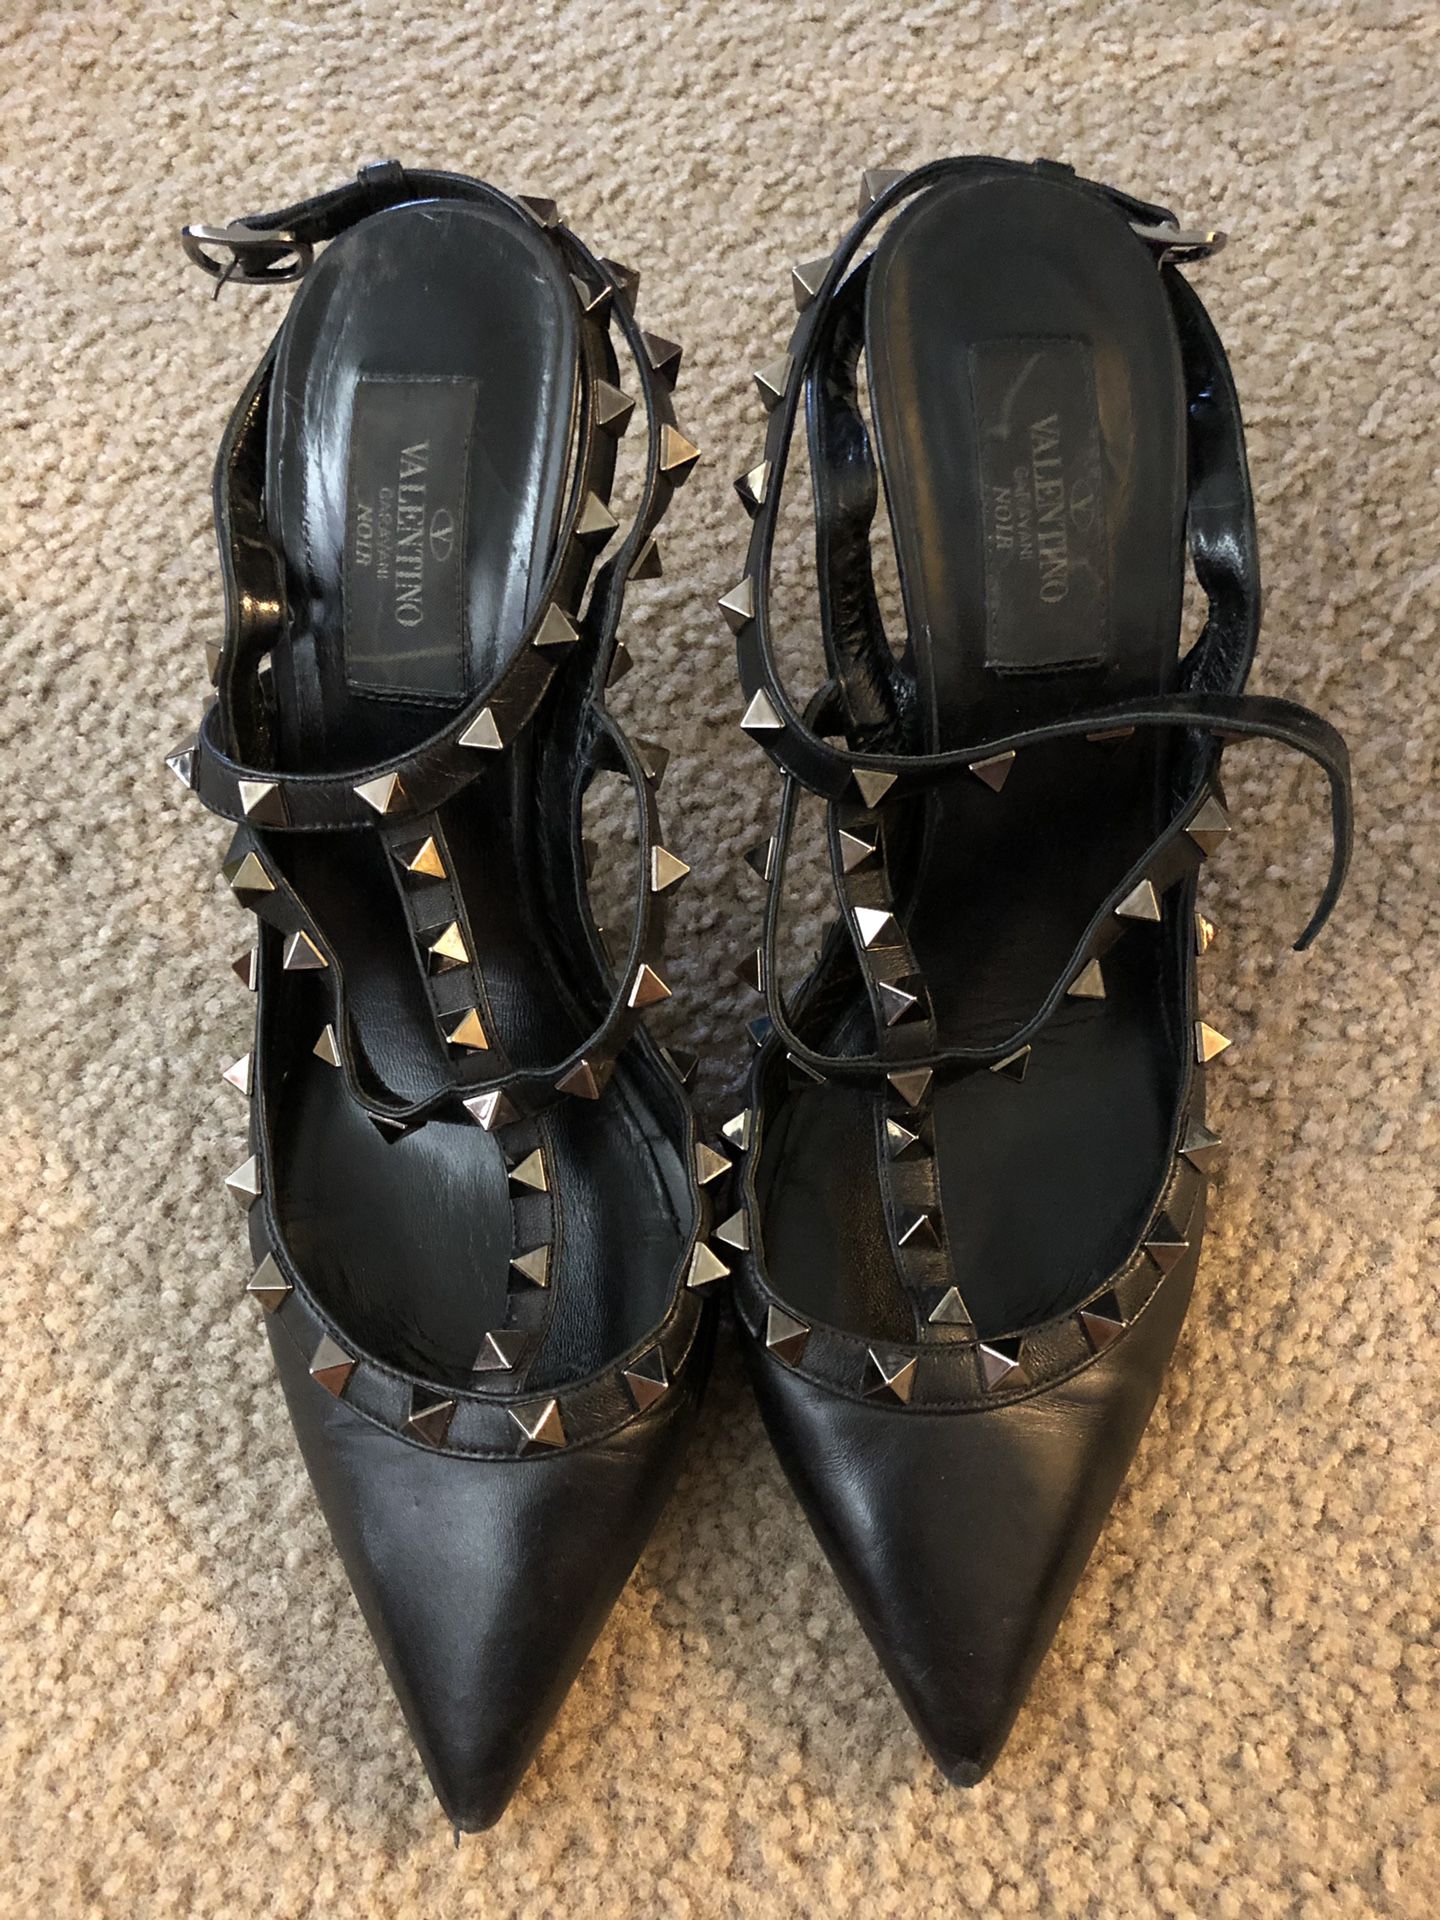 Valentino Noir High heels Rockstud Size 38.5 Mint Condition